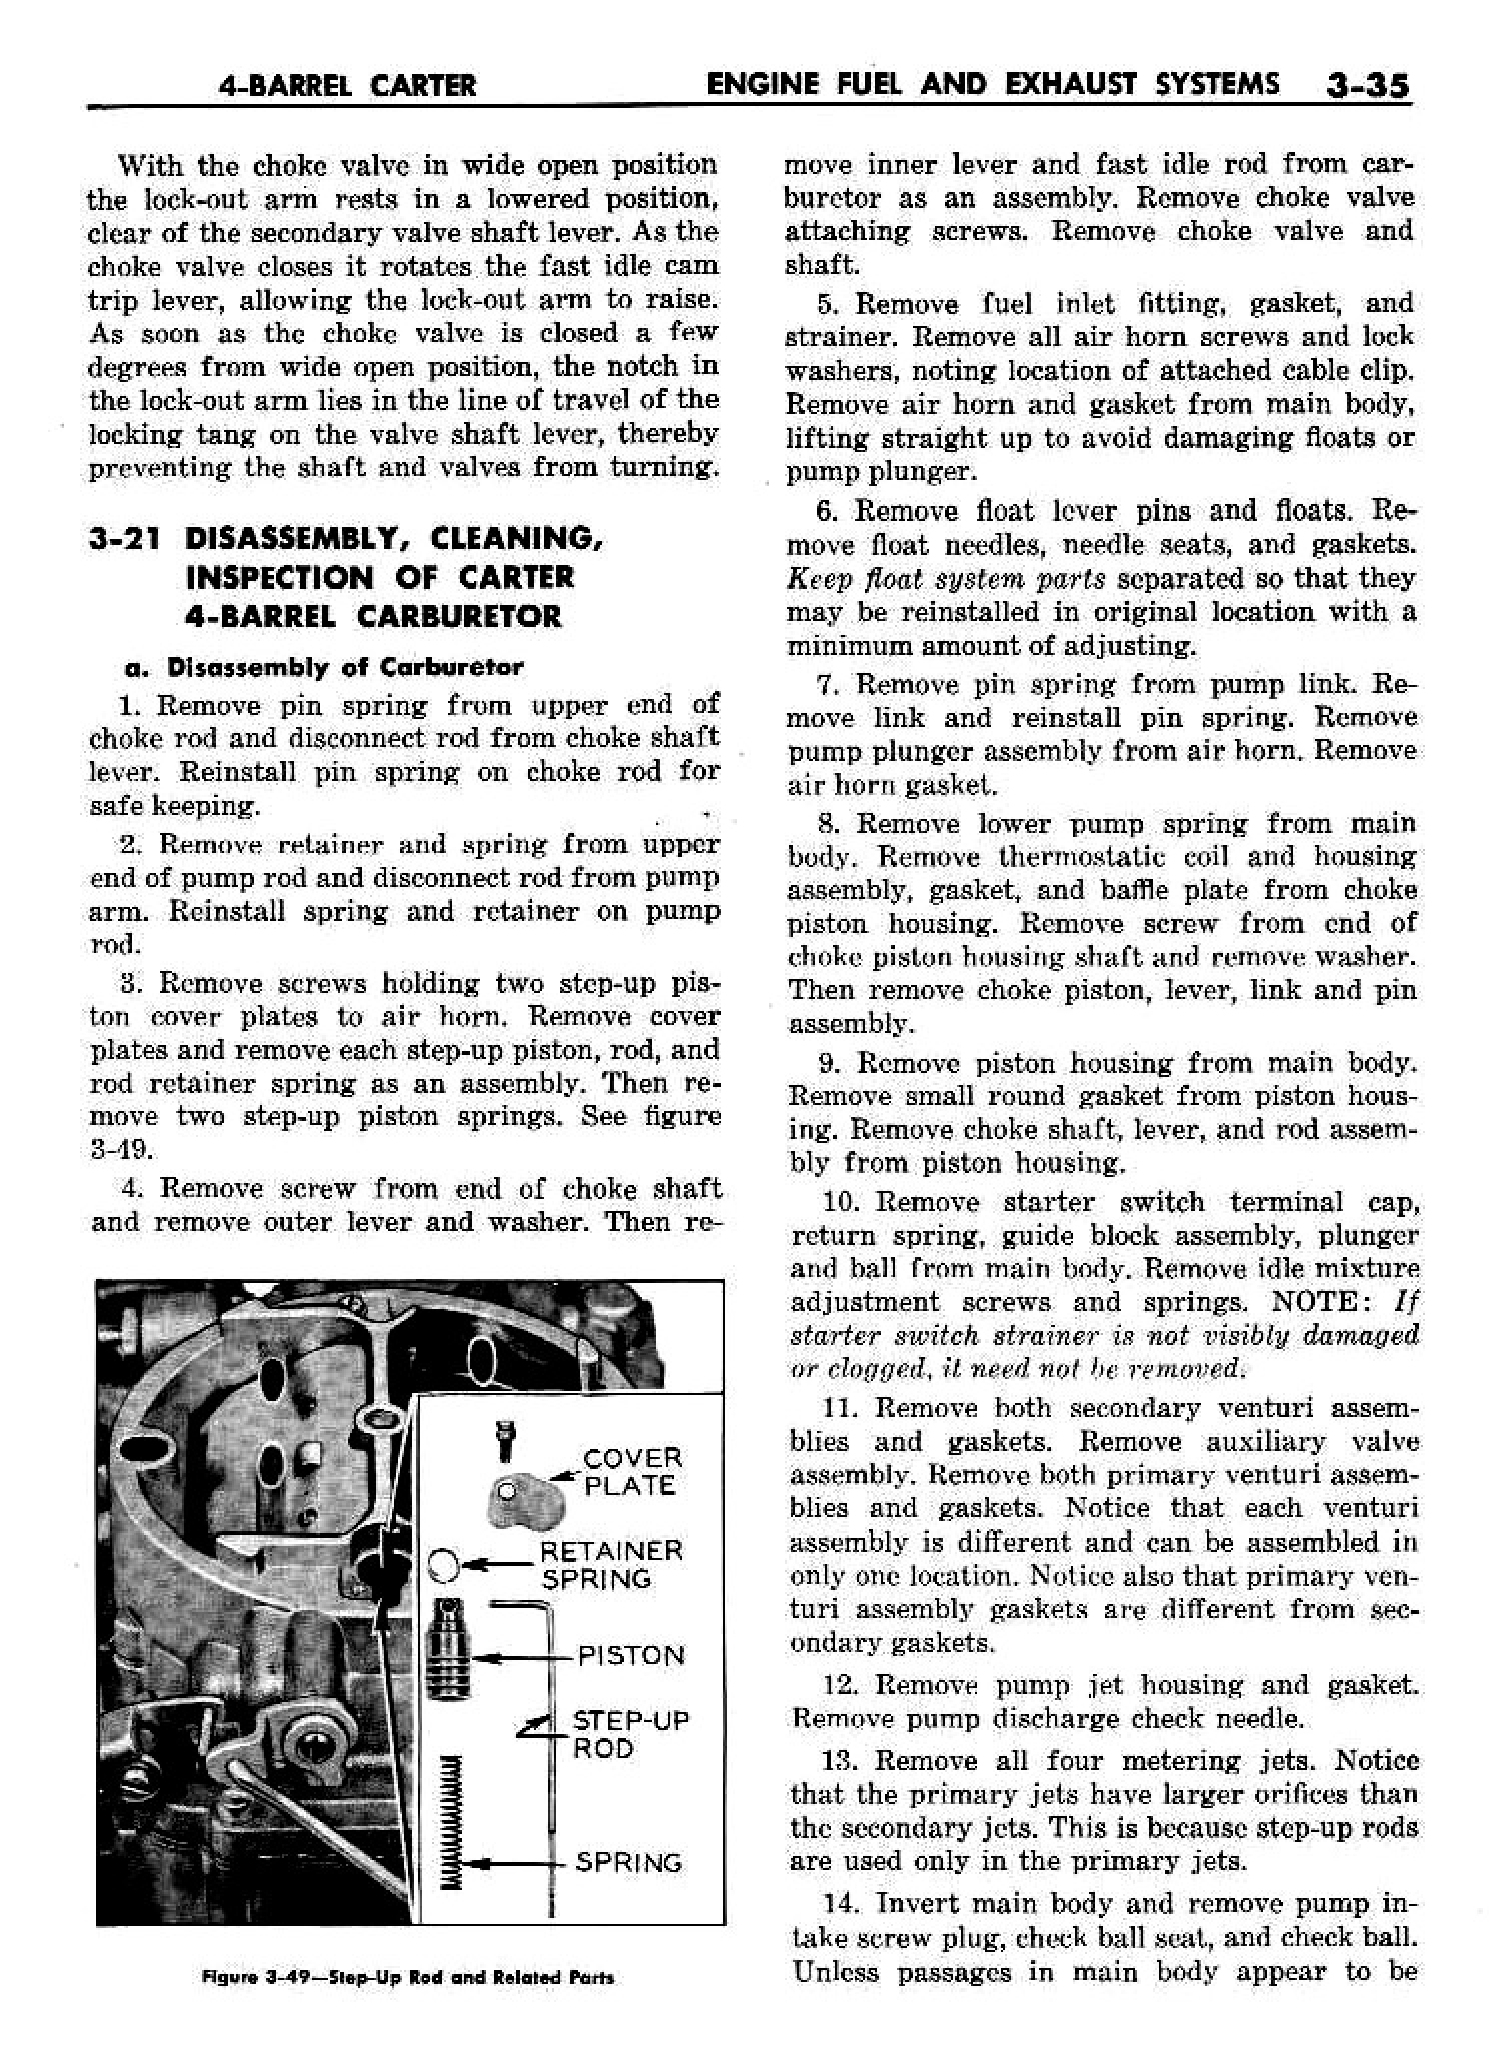 n_04 1958 Buick Shop Manual - Engine Fuel & Exhaust_35.jpg